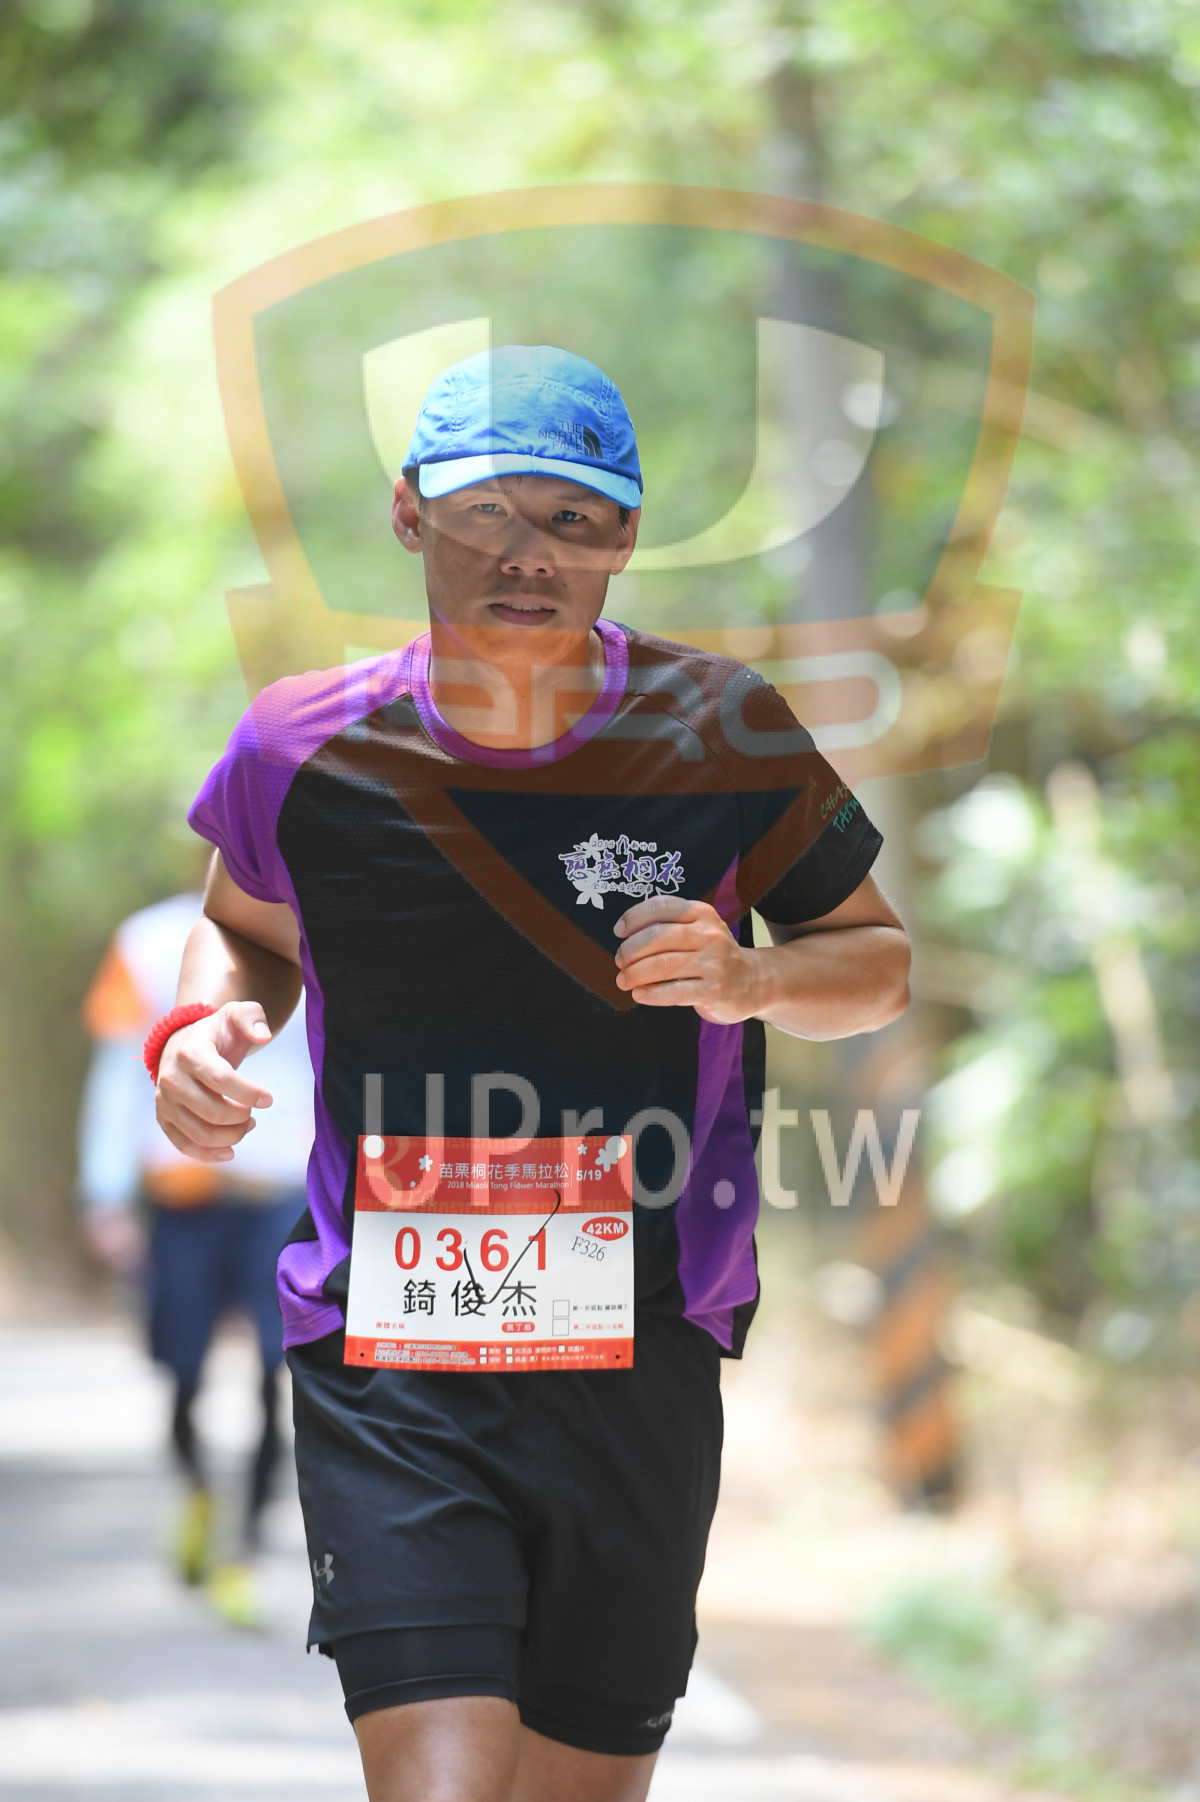 * 5,19,0,Maoli Tong Hower Marathon,42KM,0361,|綠色隧道6|中年人